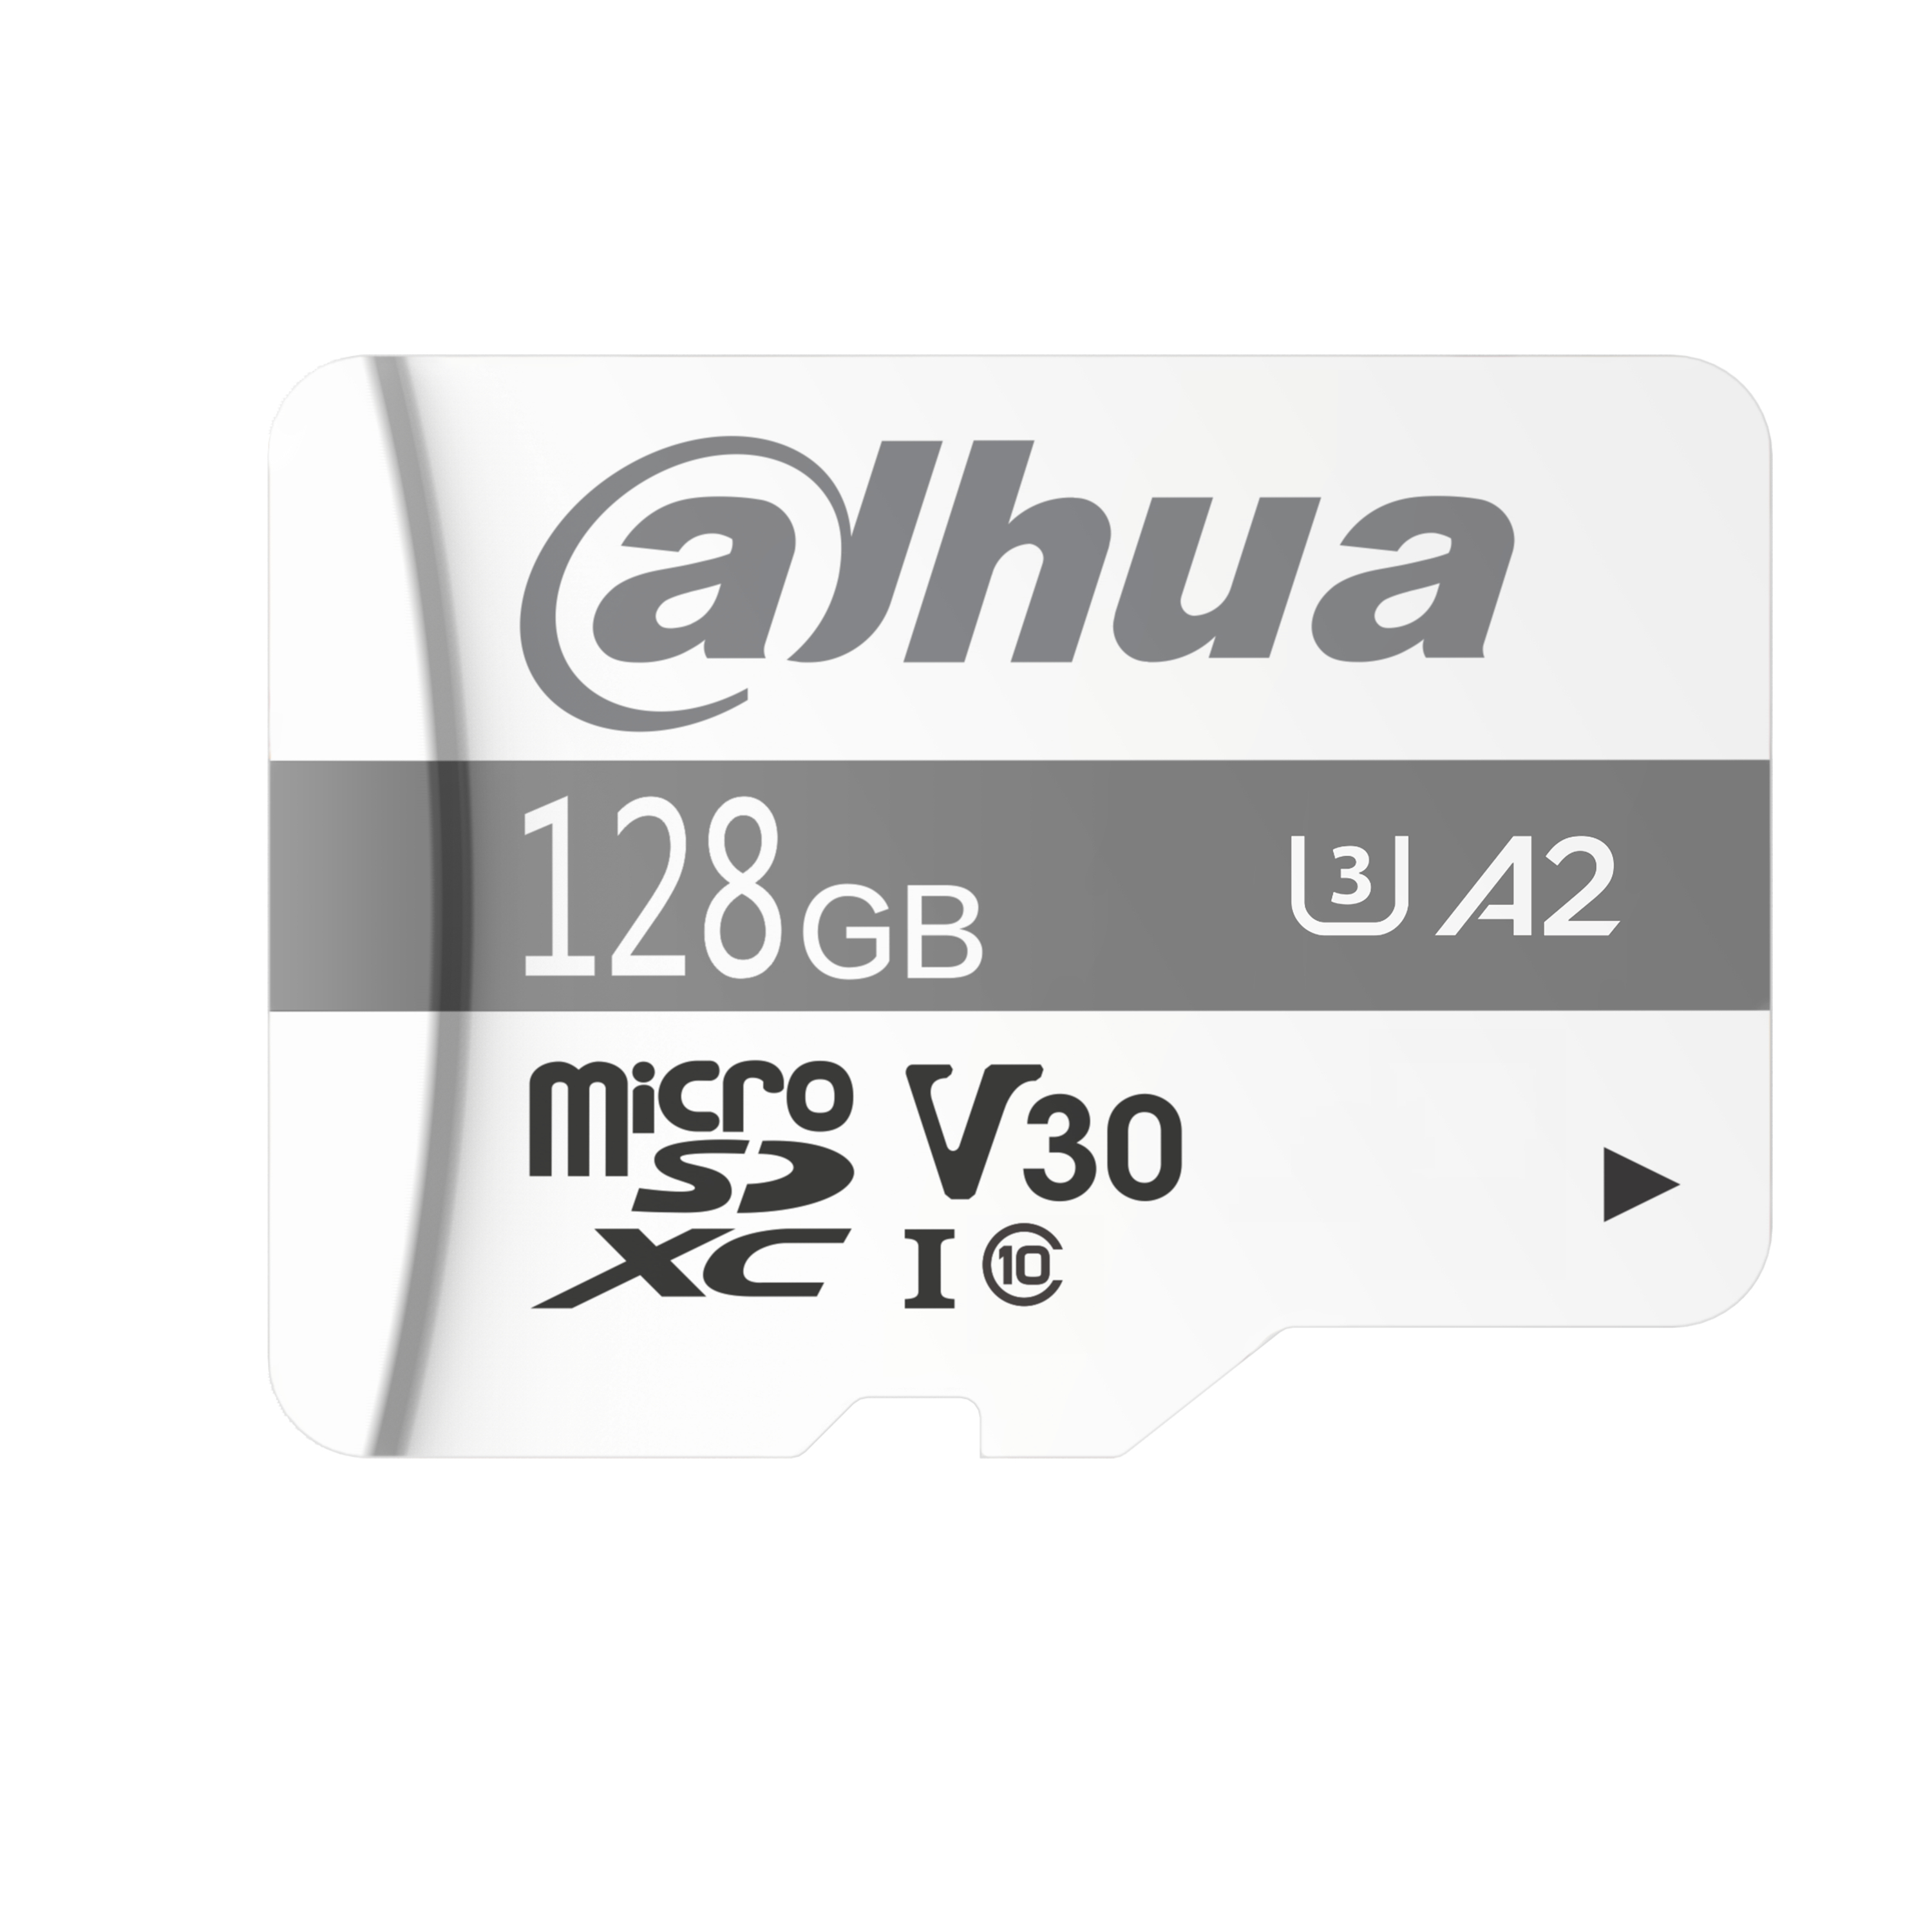 Dahua Discos Duros Seagate para Cámaras seguridad SSTT - TF-P100128GB - Imagen referencial